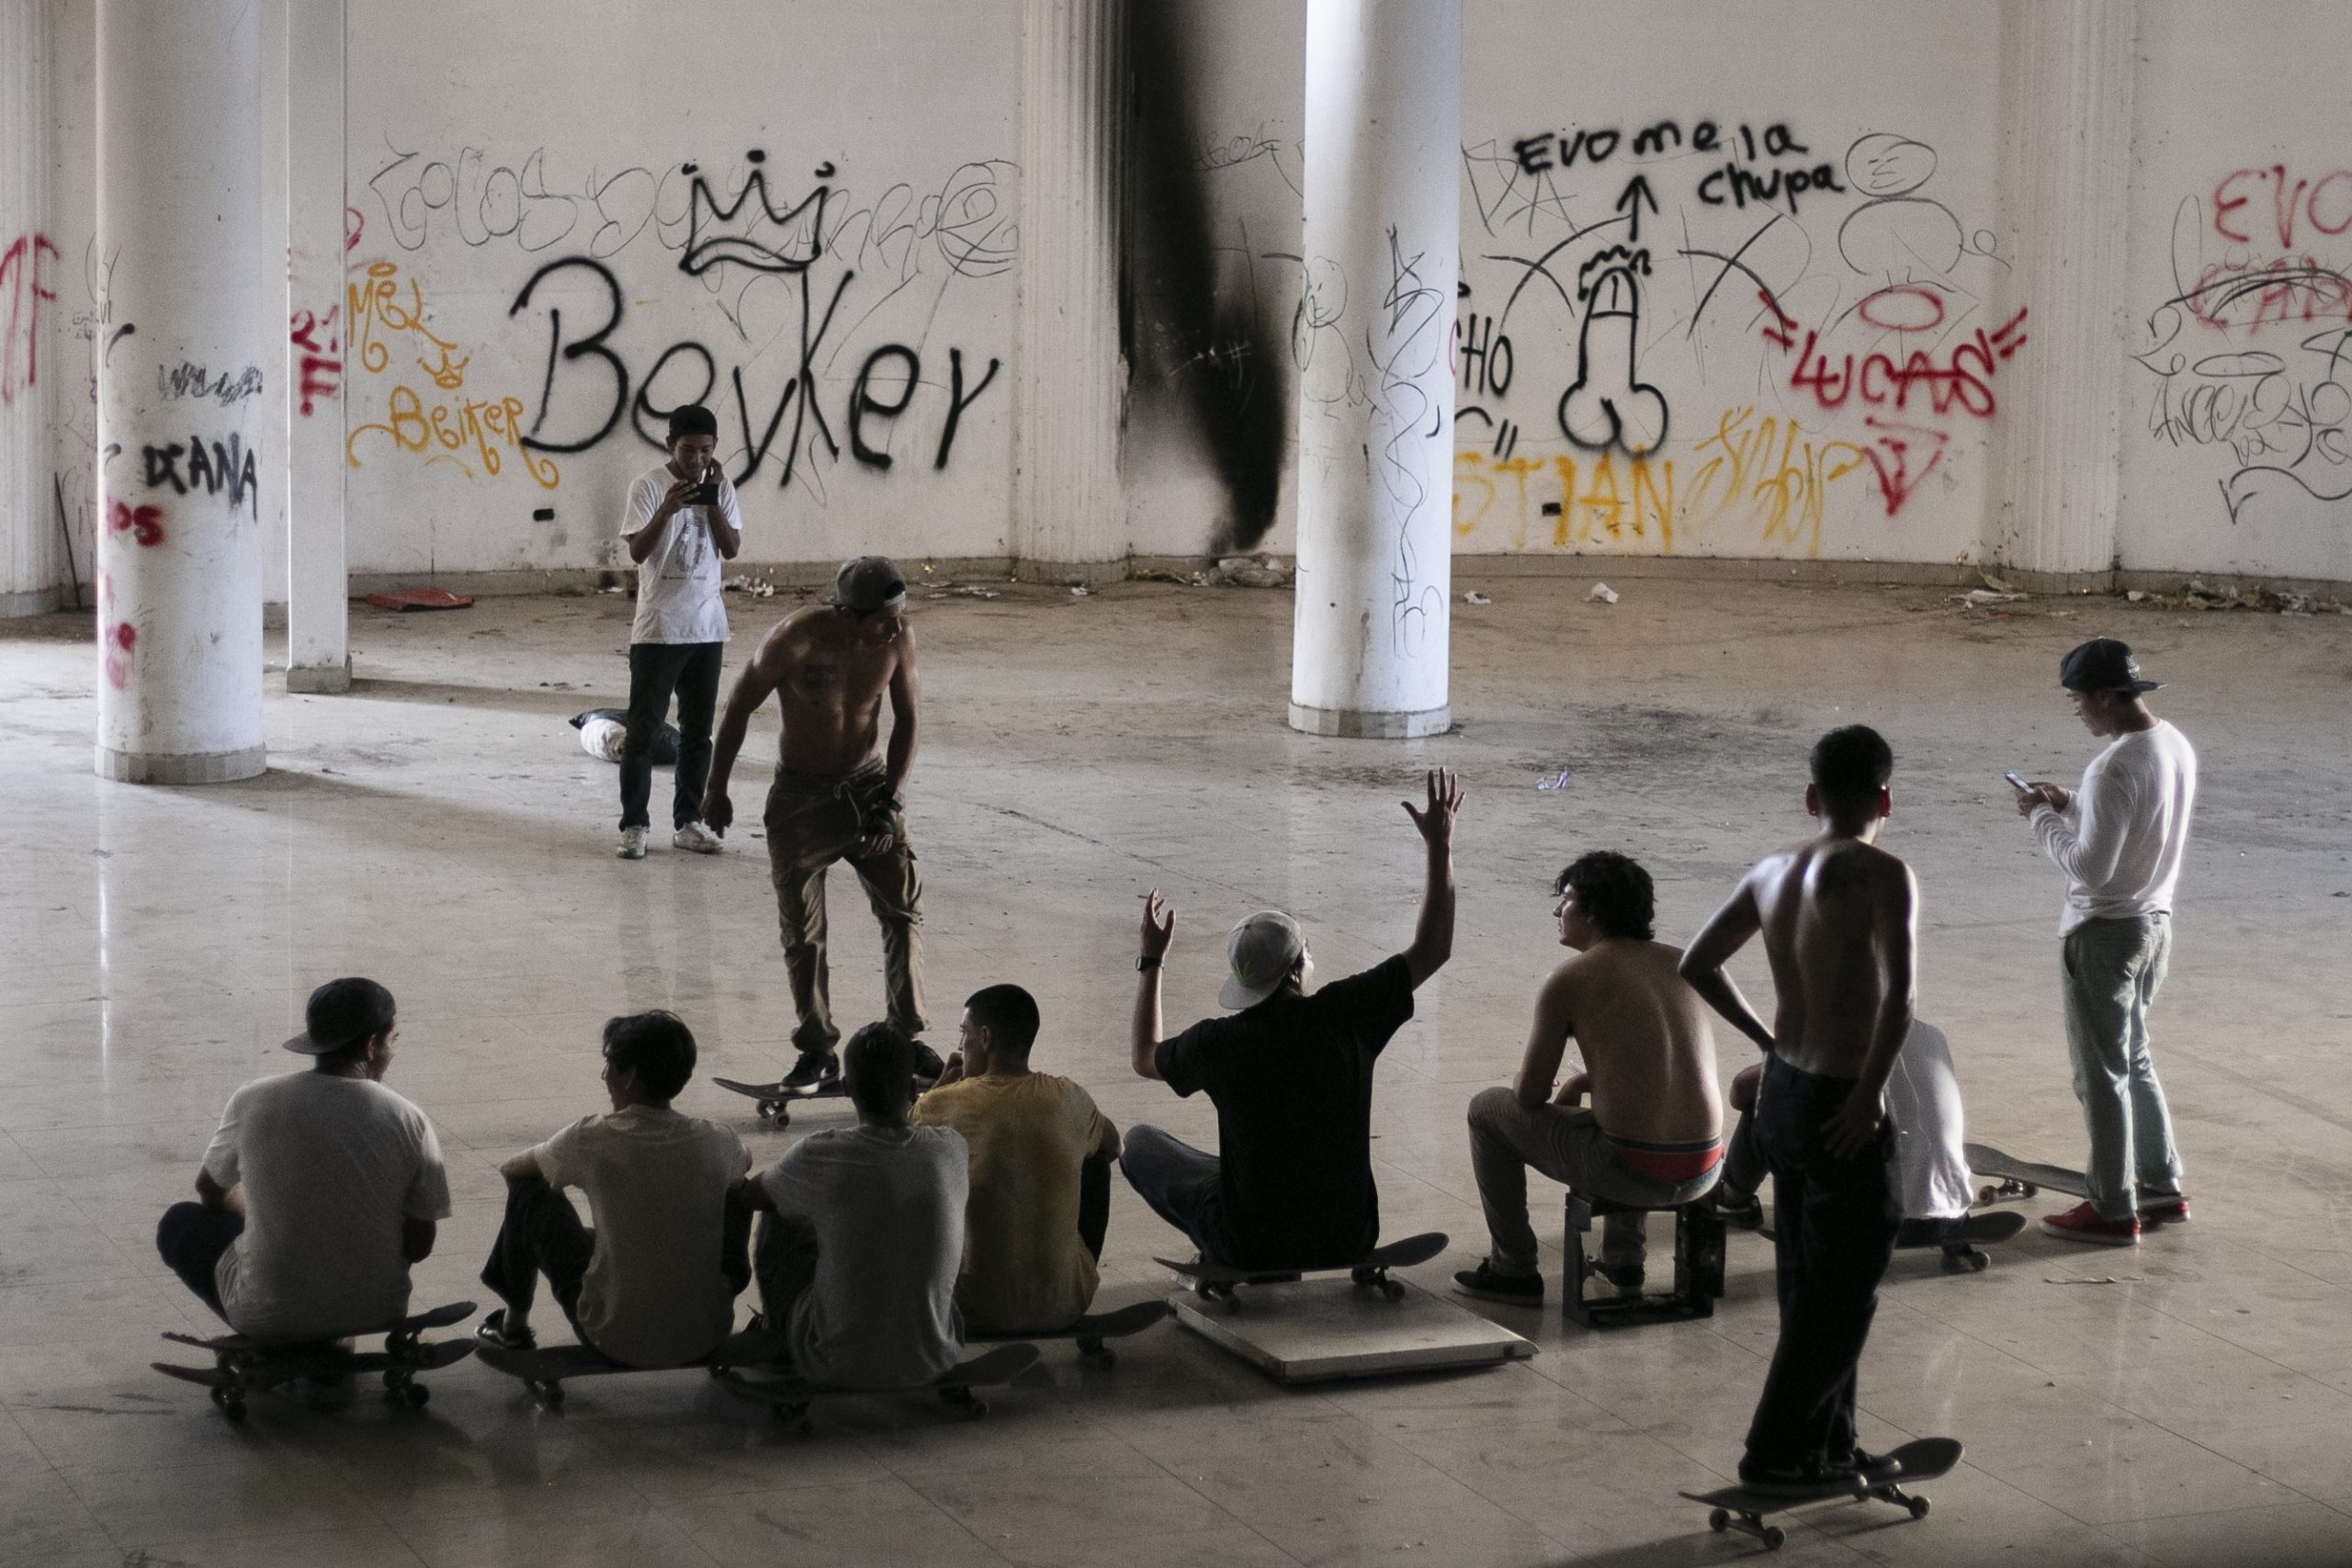 Skate session in an abandoned building somewhere in Santa Cruz de la Sierra - Photo by enrikoniava_